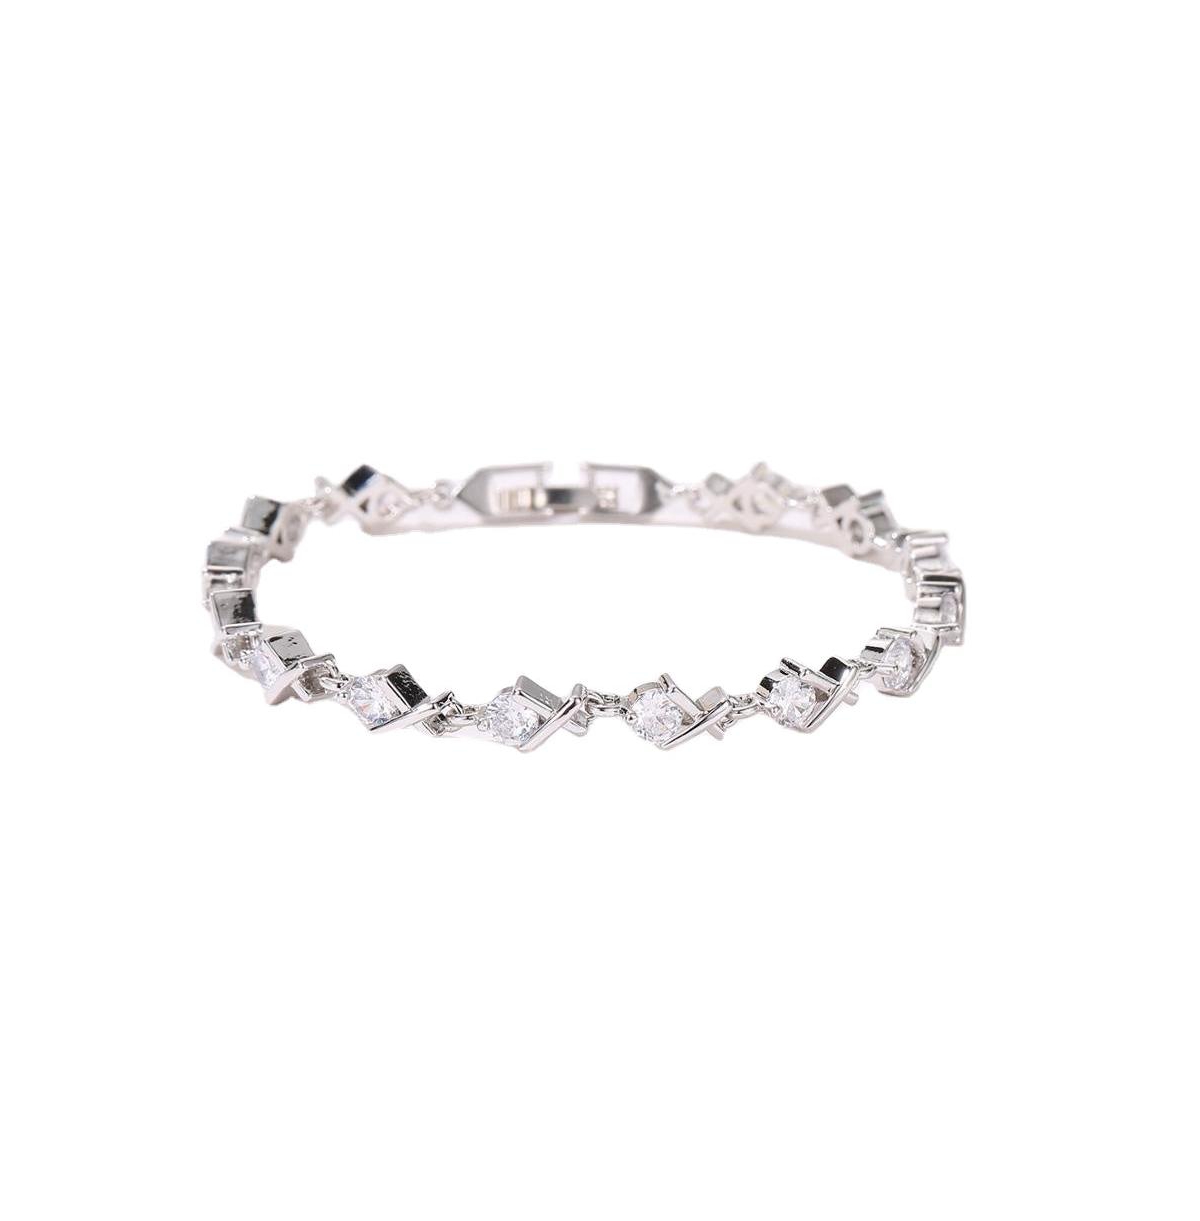 Xo Tennis Bracelet for Women with Round Cut White Diamond Cubic Zirconia Stones - Silver